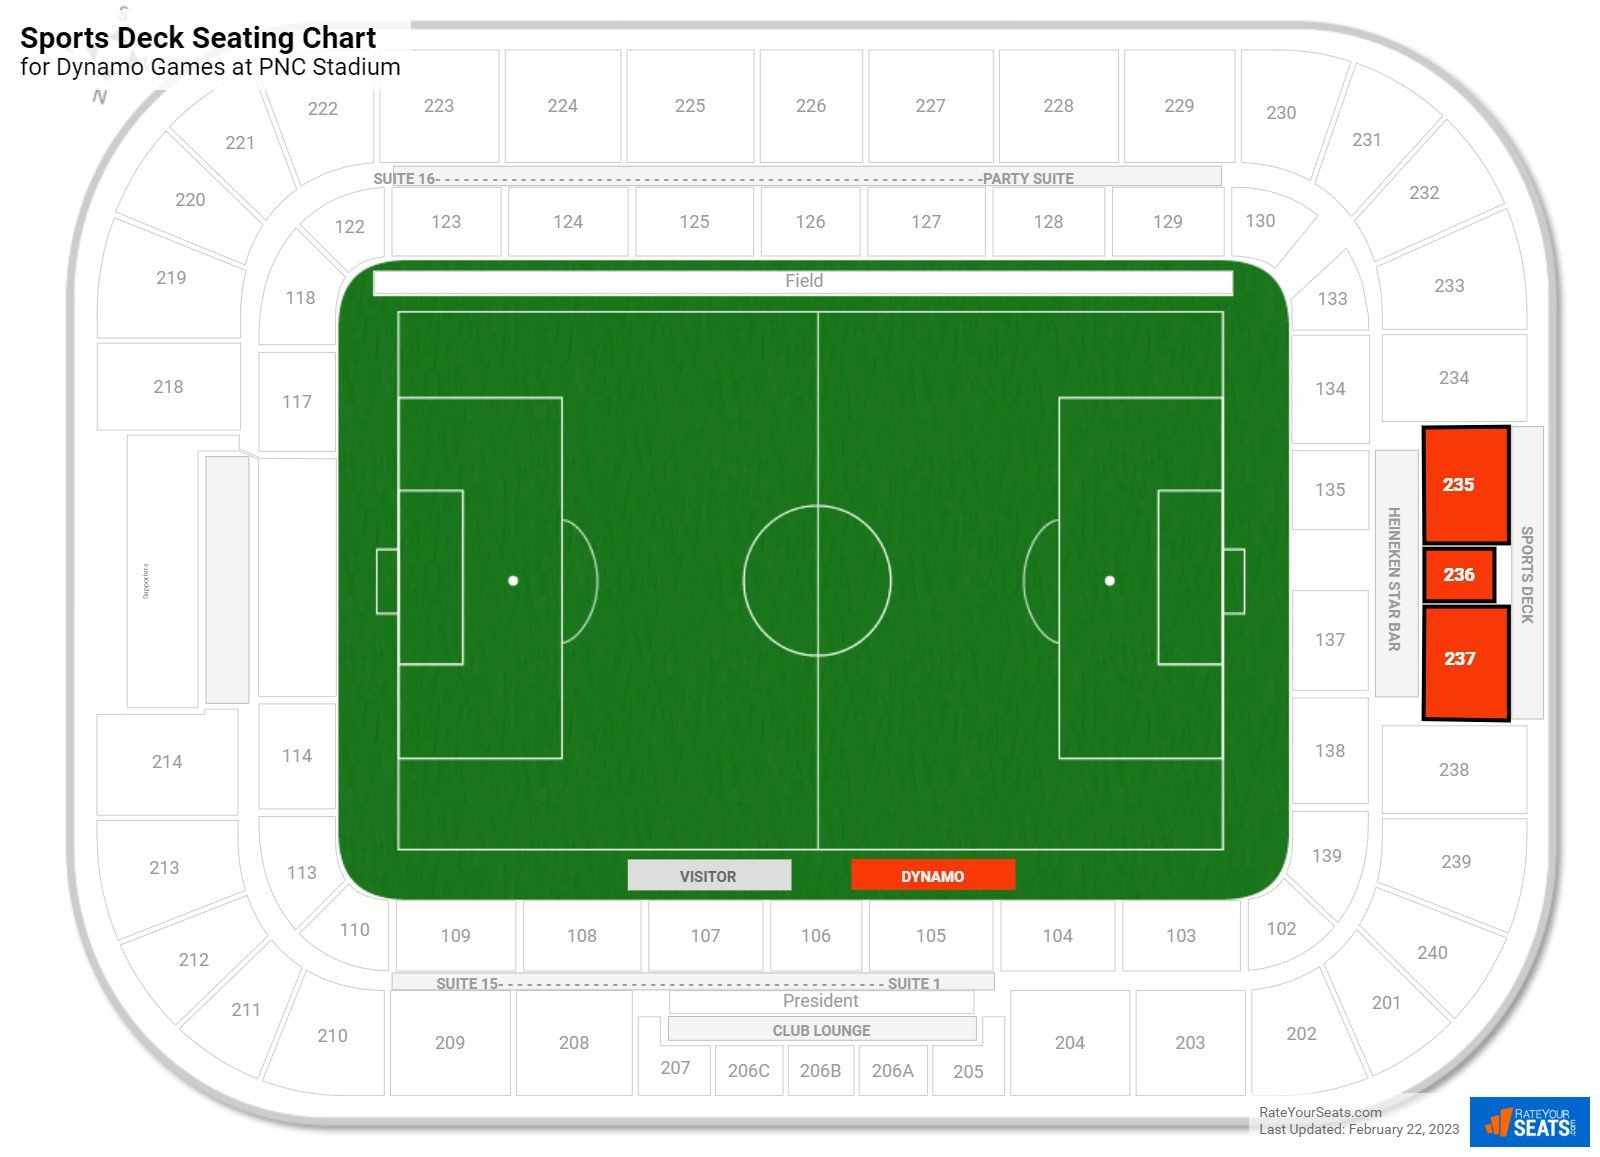 Dynamo Sports Deck Seating Chart at PNC Stadium